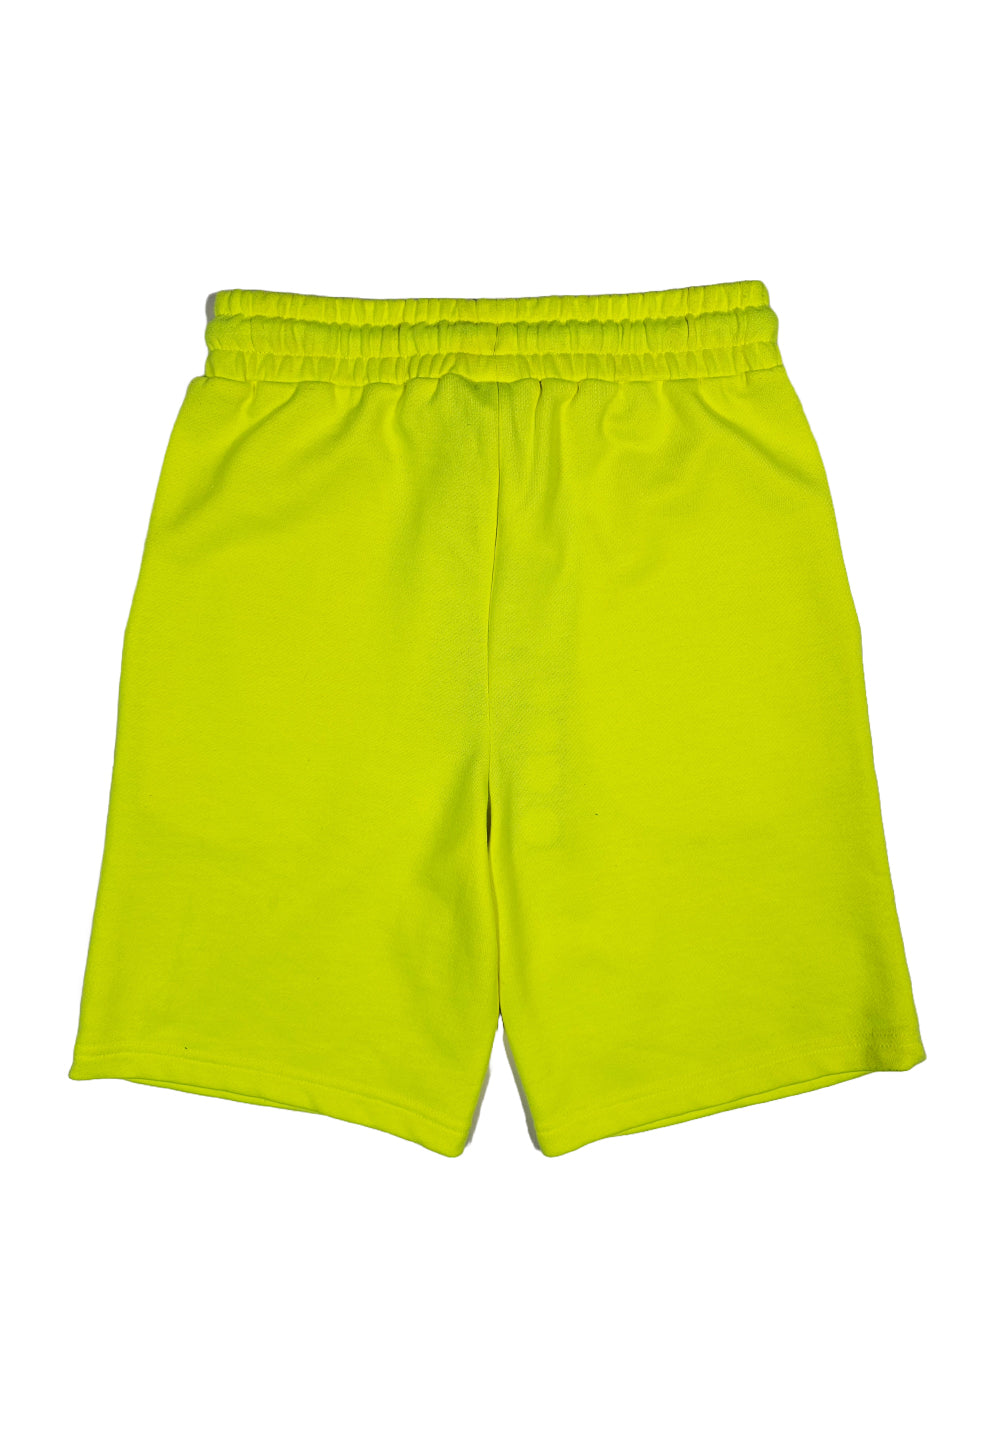 Fluorescent yellow sweatshirt bermuda shorts for boys